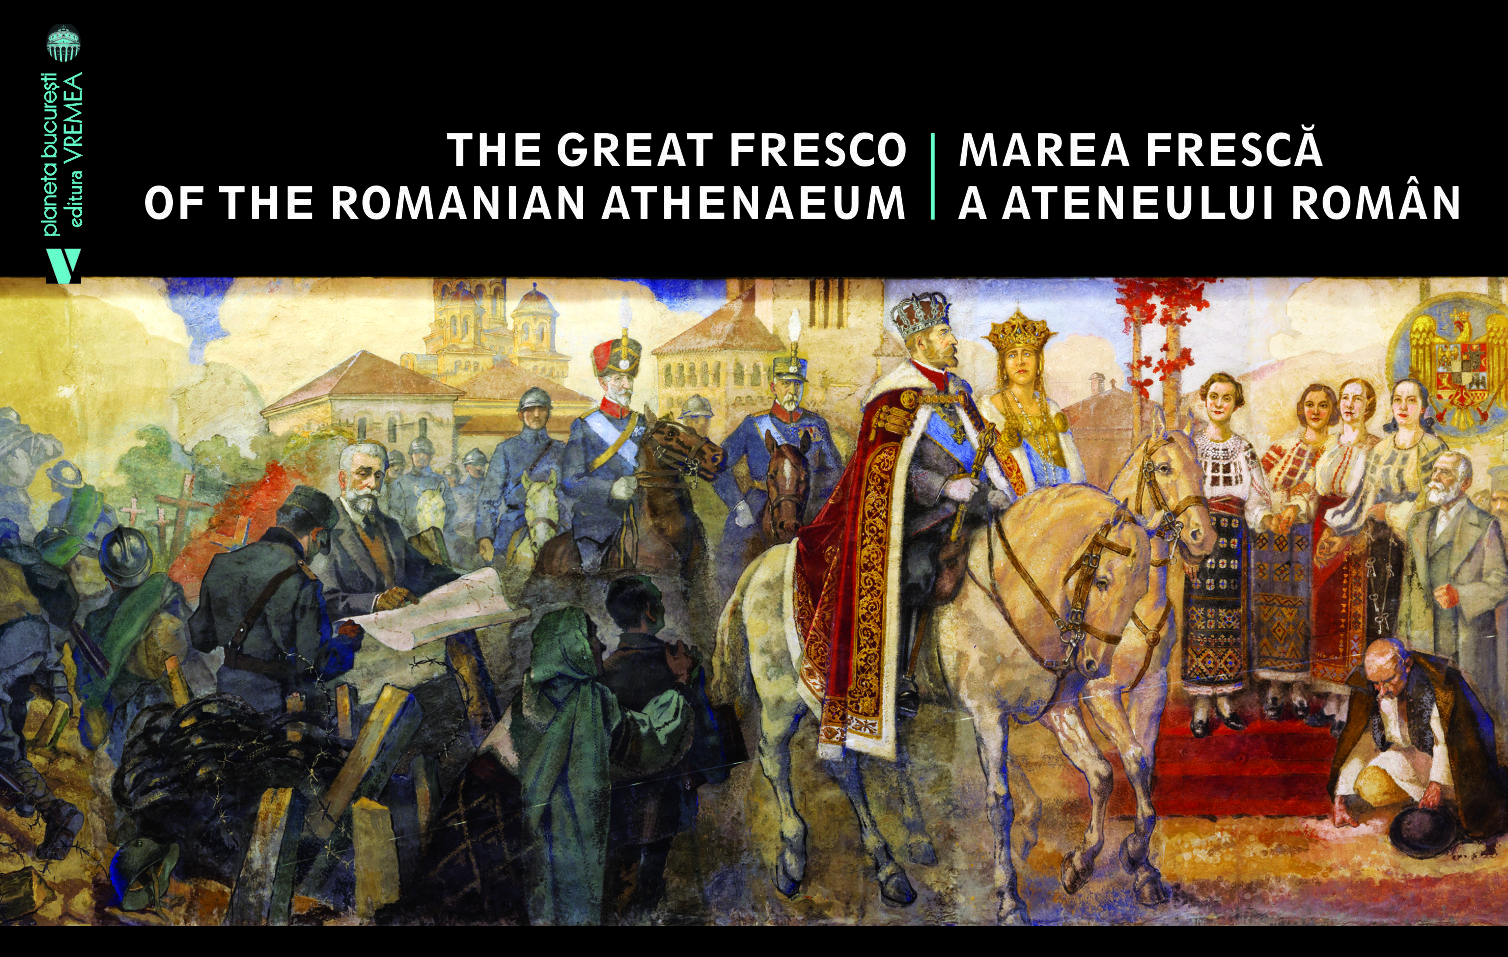 The Great Fresco of the Romanian Athenaeum / Marea fresca a Ateneului Roman - Editie bilingva romana-engleza | Silvia Colfescu